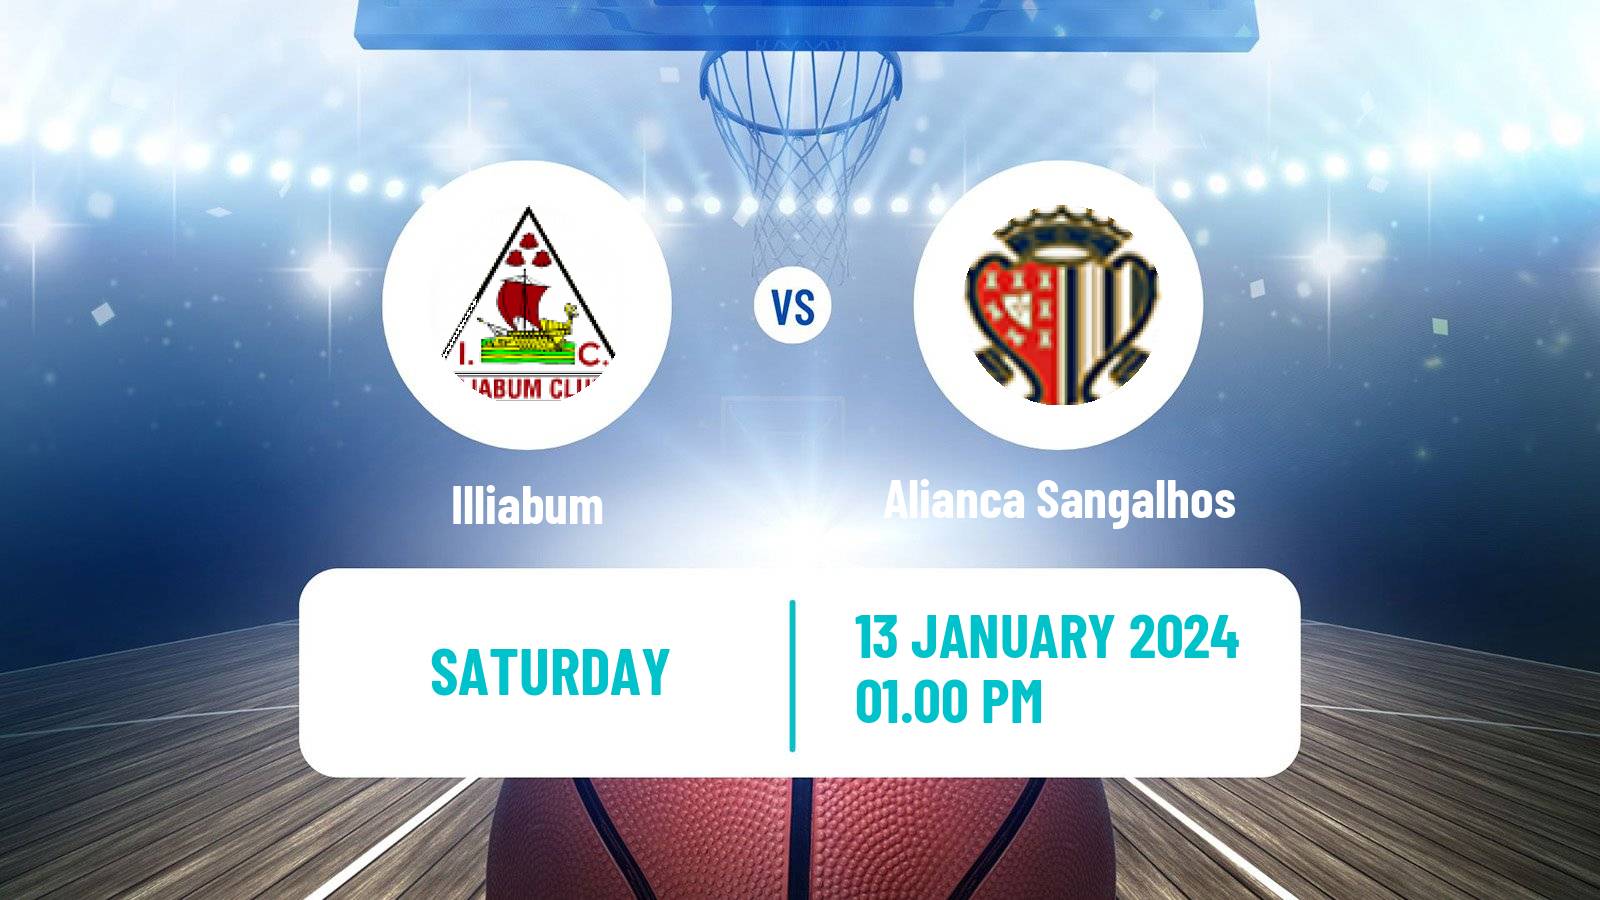 Basketball Portuguese Proliga Basketball Illiabum - Alianca Sangalhos